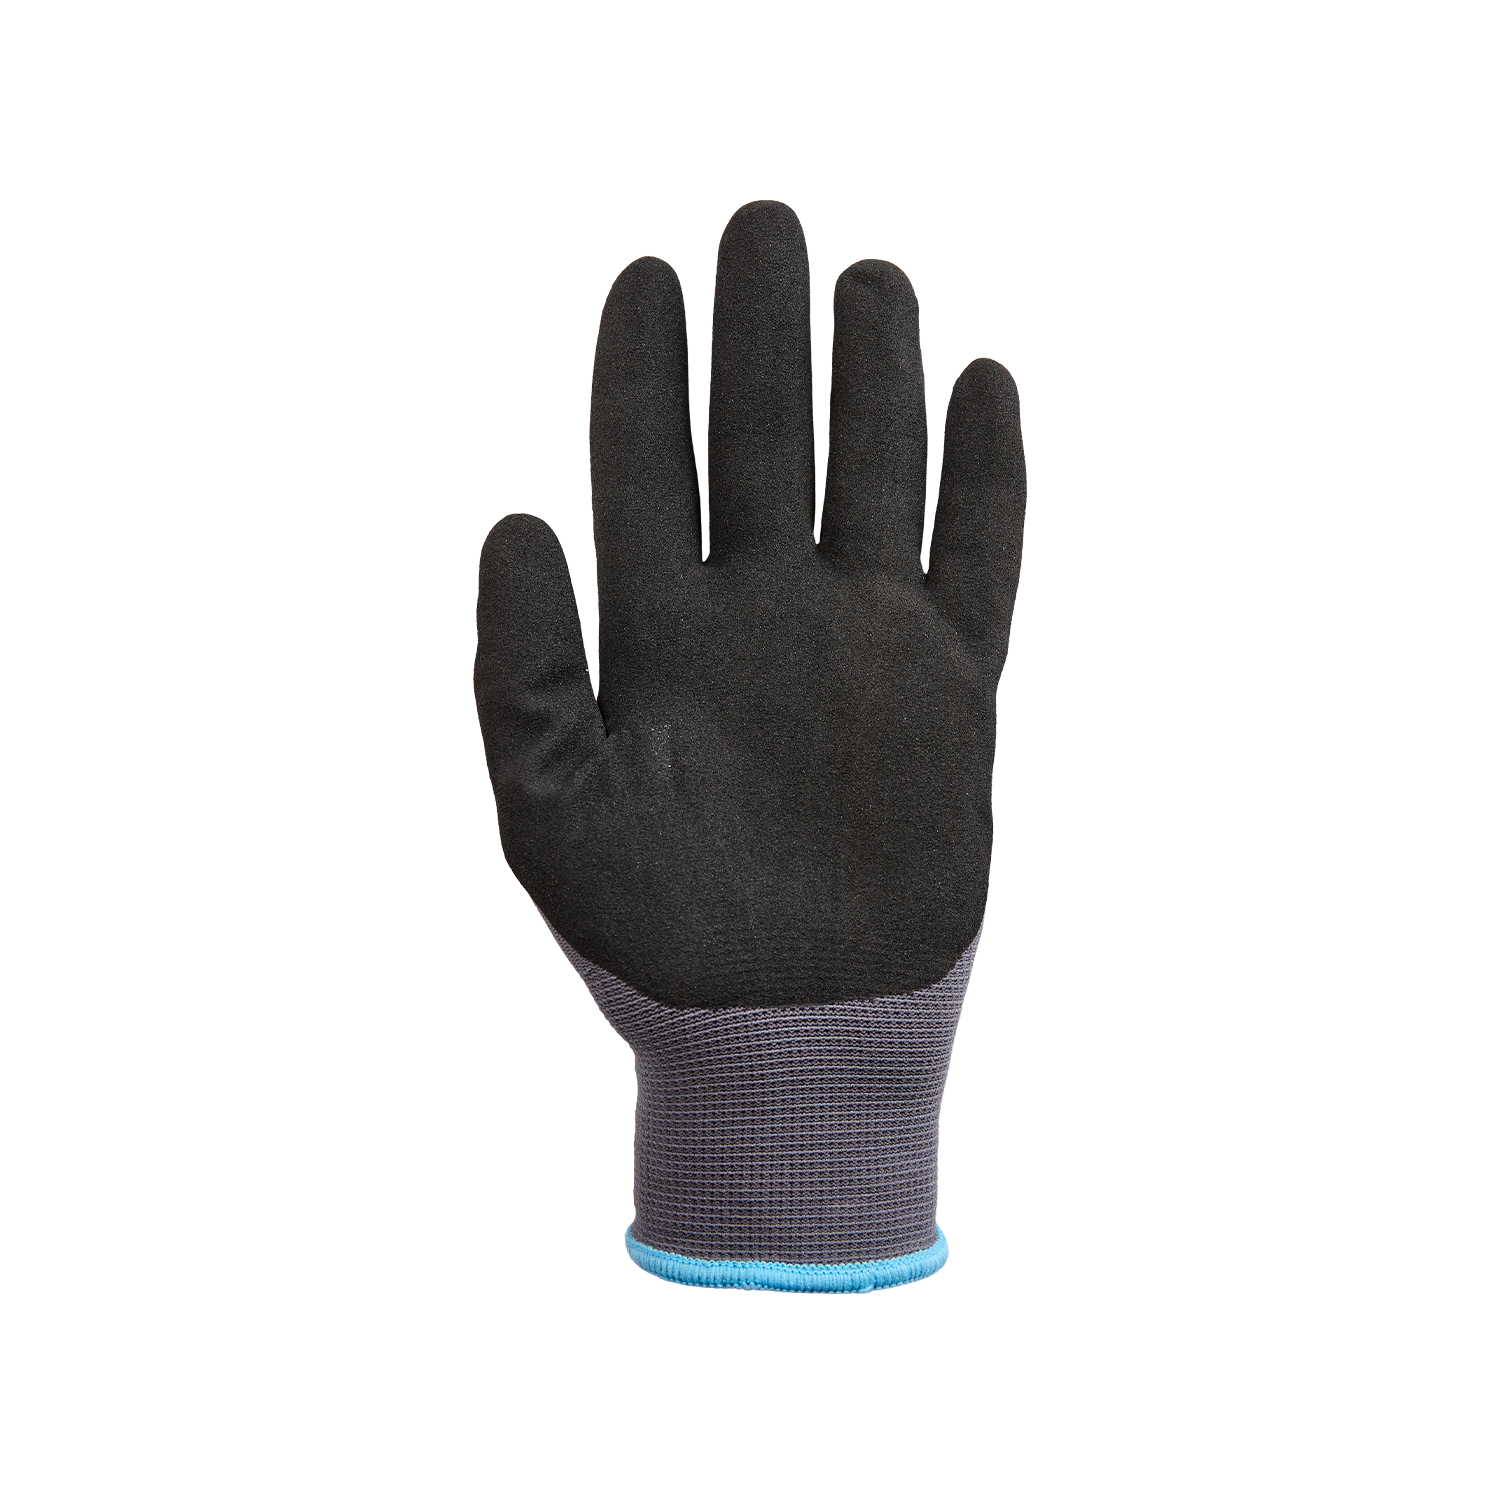 NORSE Flex Original assembly gloves size 8